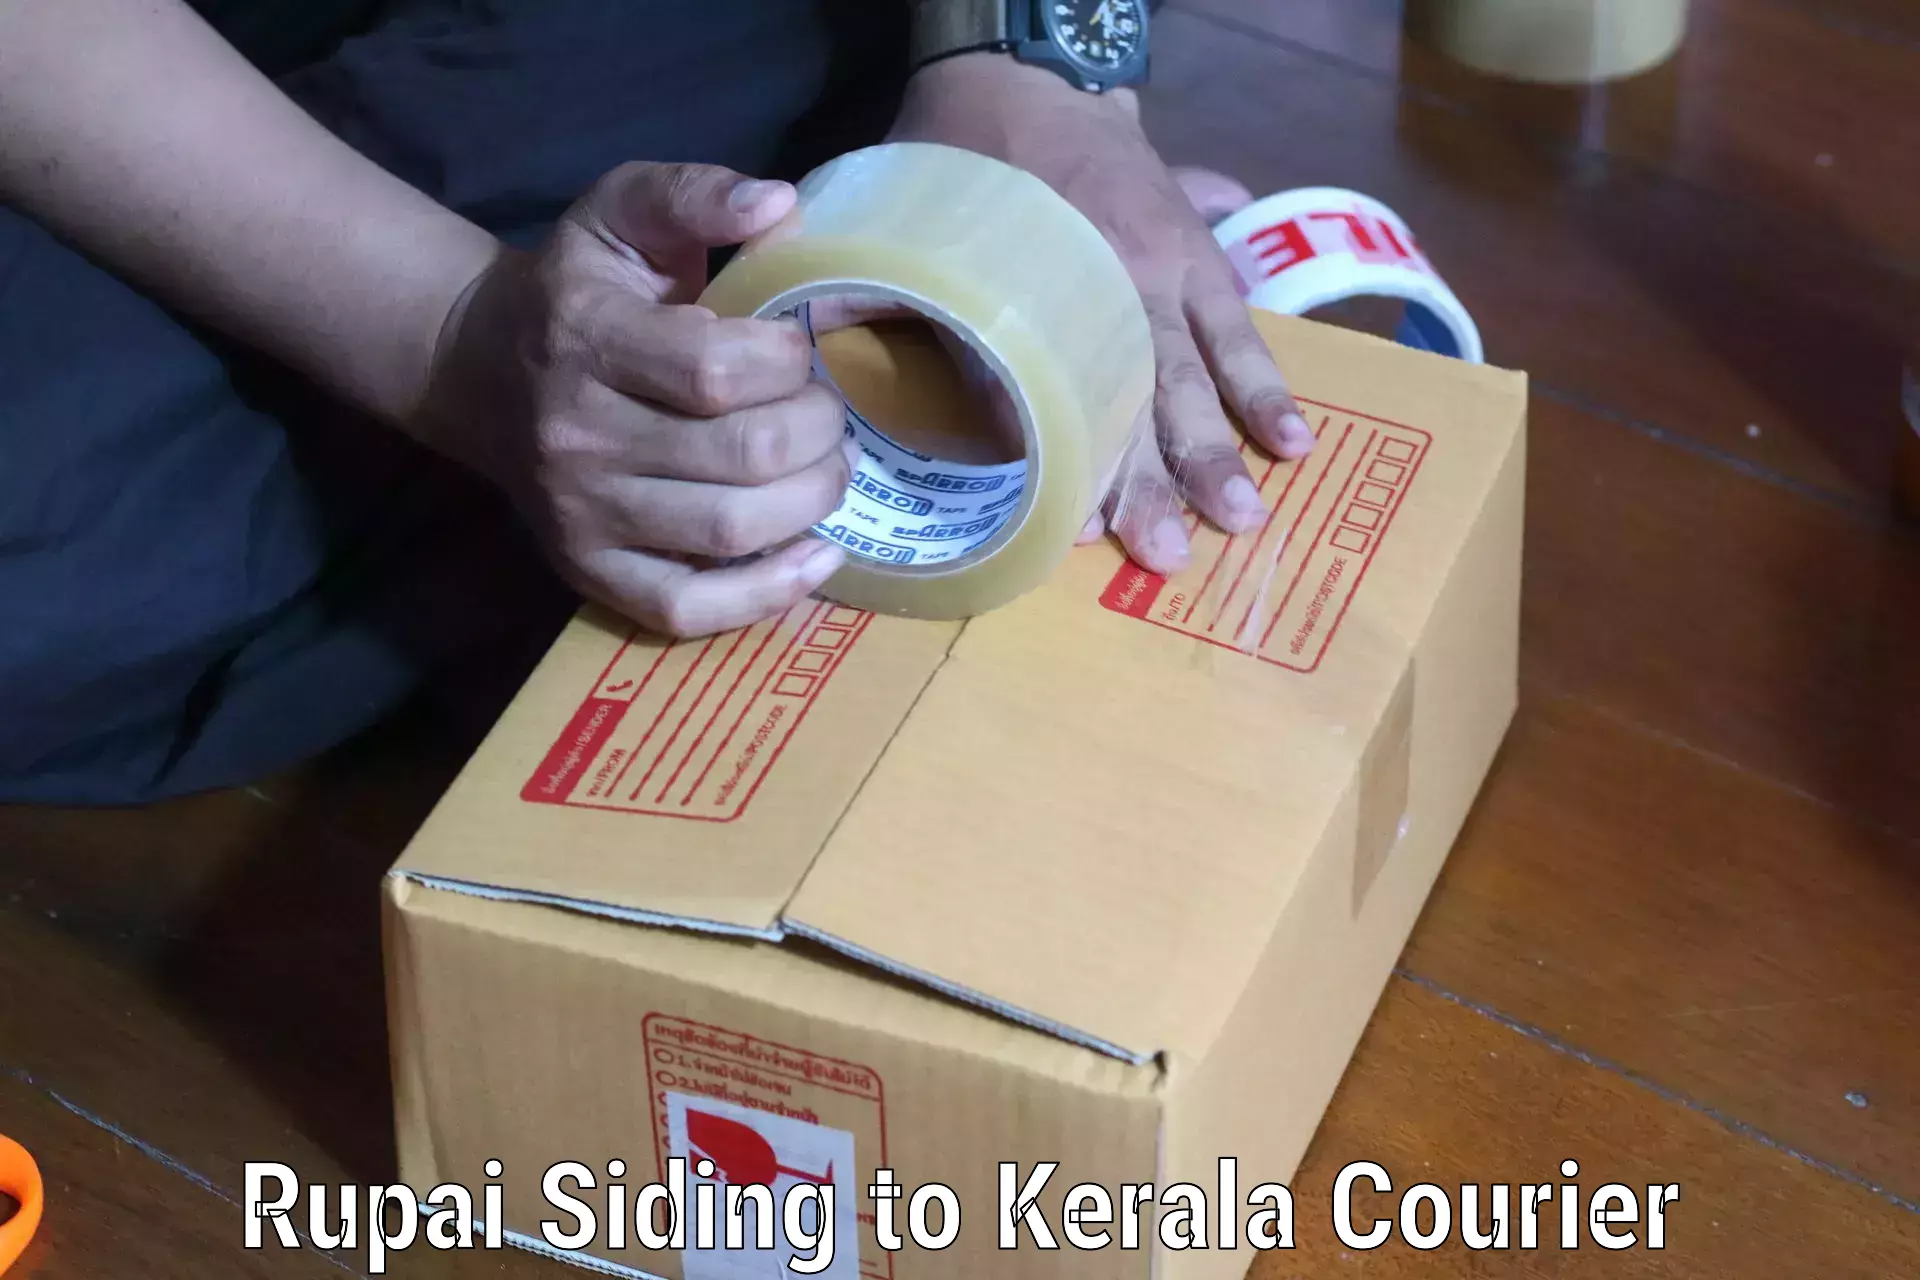 Easy return solutions Rupai Siding to Kerala